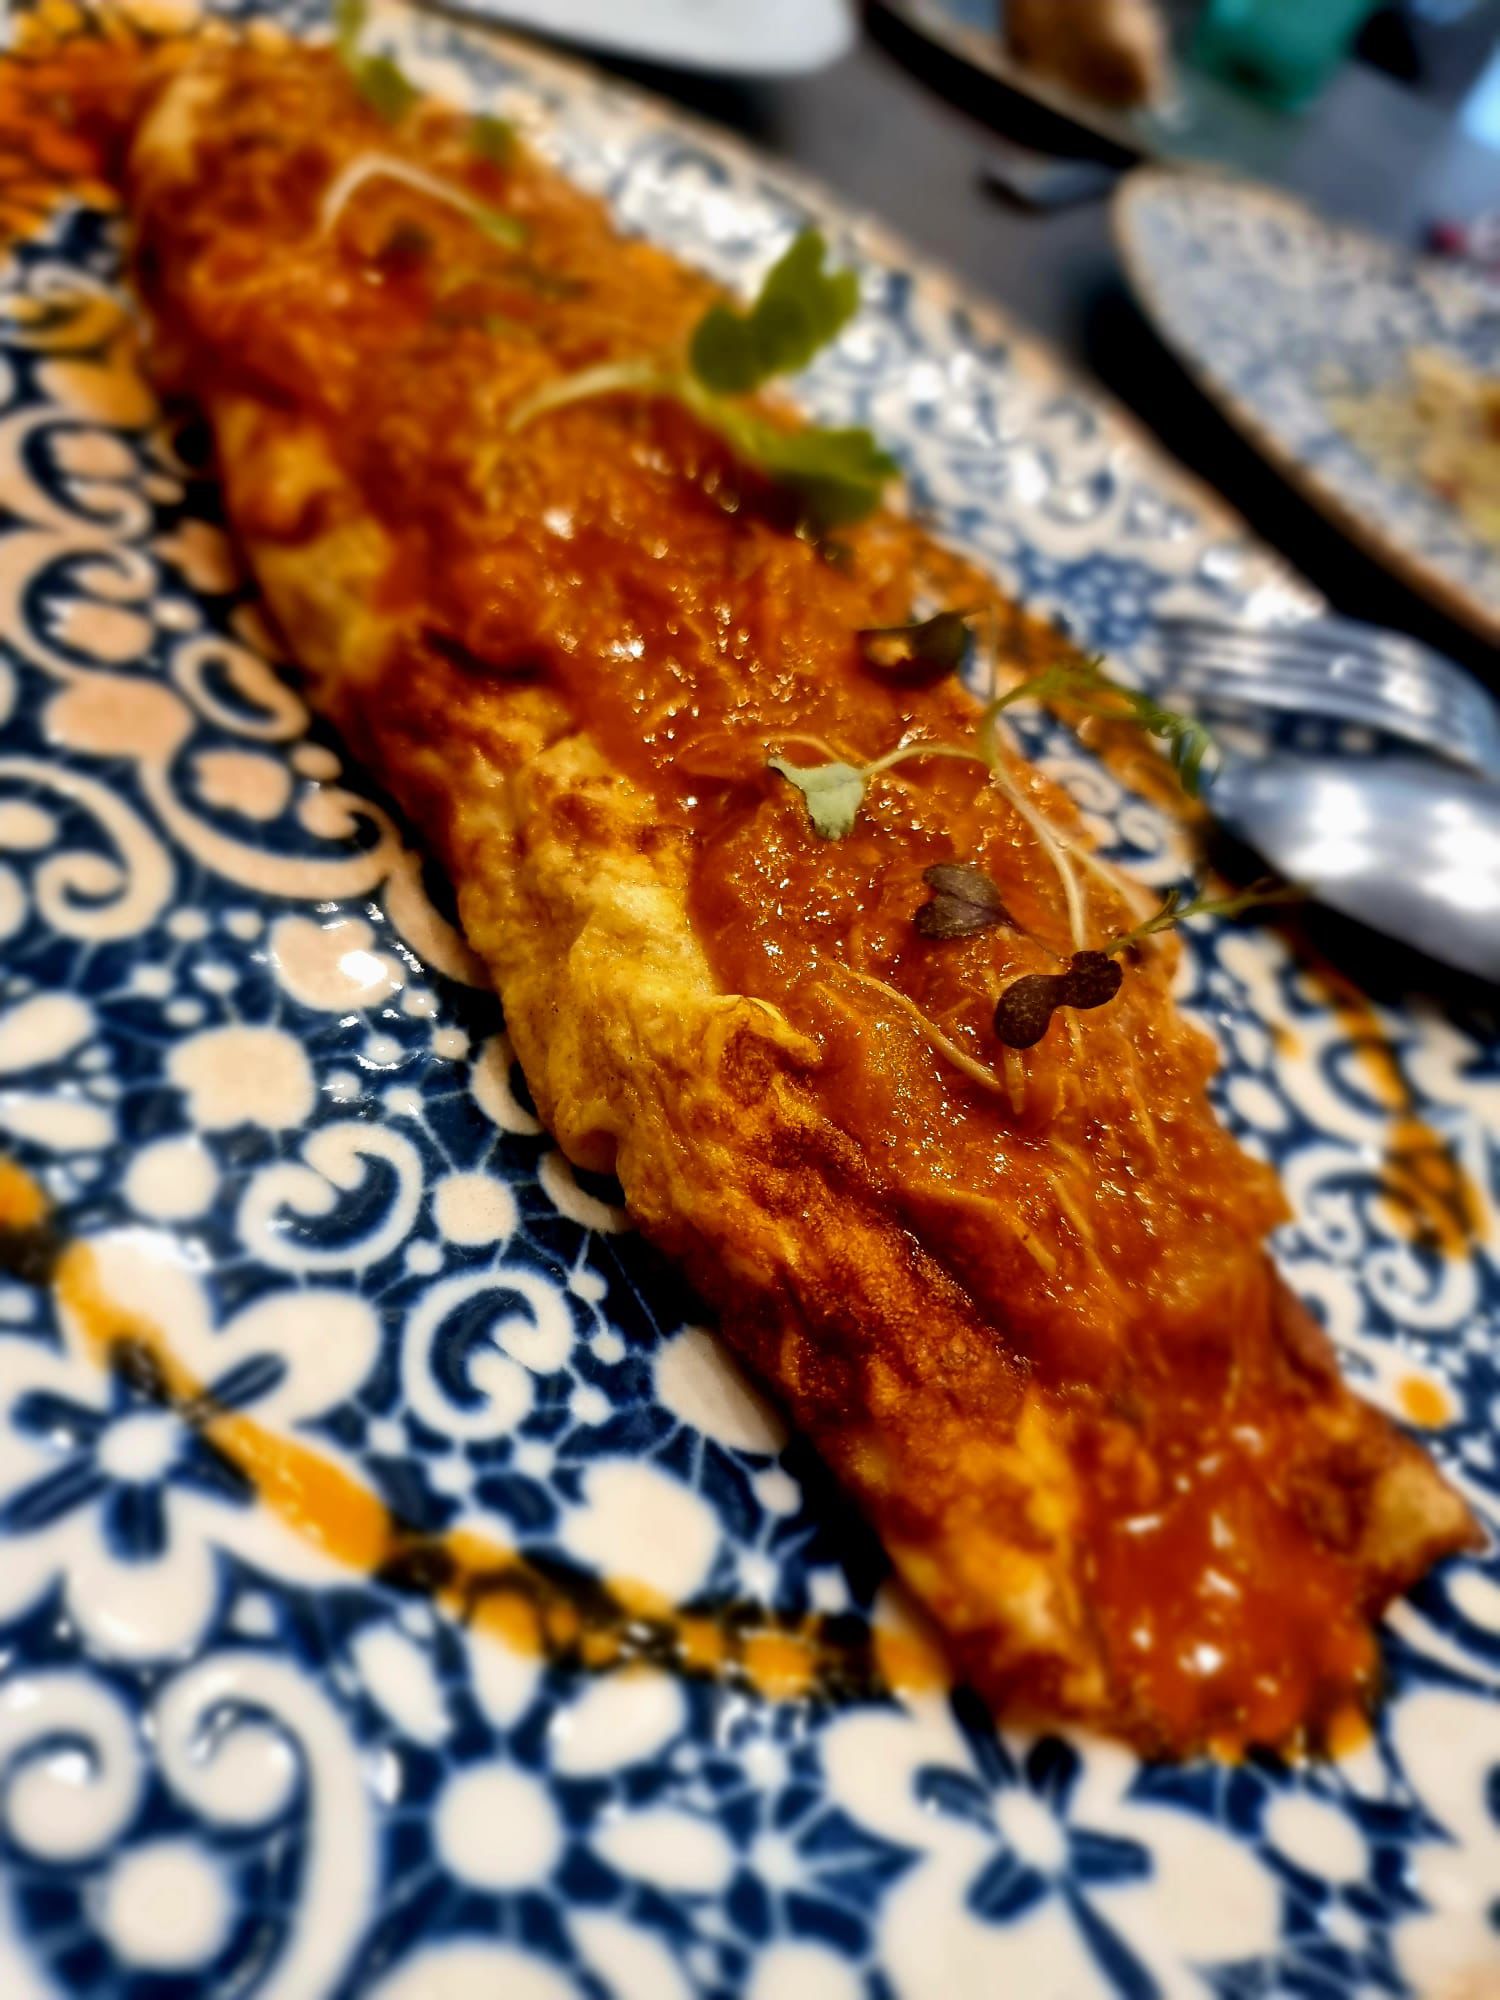 Changurro omelette